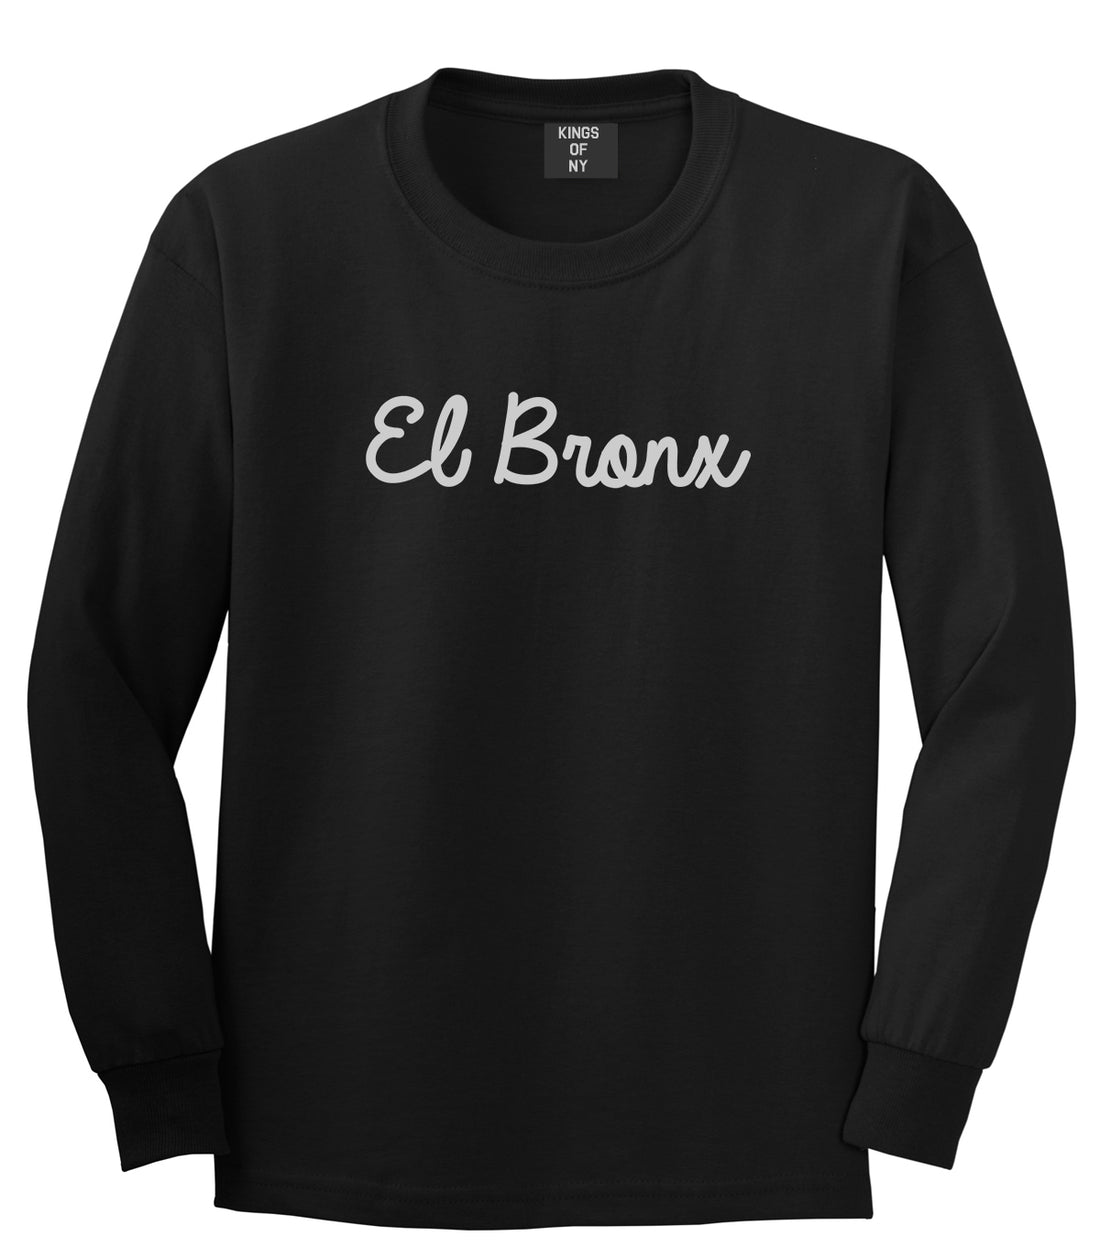 El Bronx Spanish Script Mens Long Sleeve T-Shirt Black by Kings Of NY